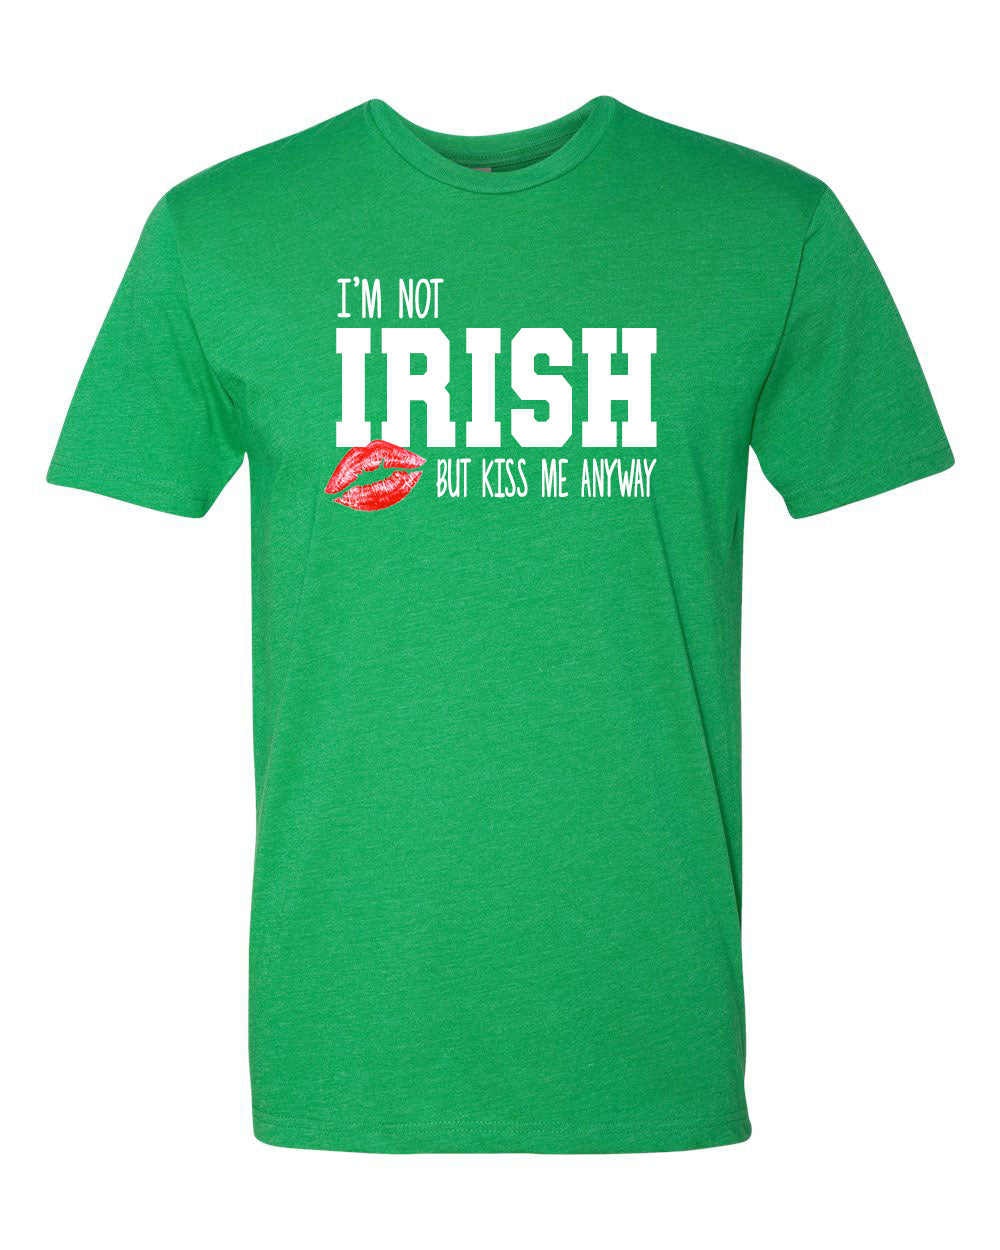 I'm not Irish but kiss me anyway T-Shirt